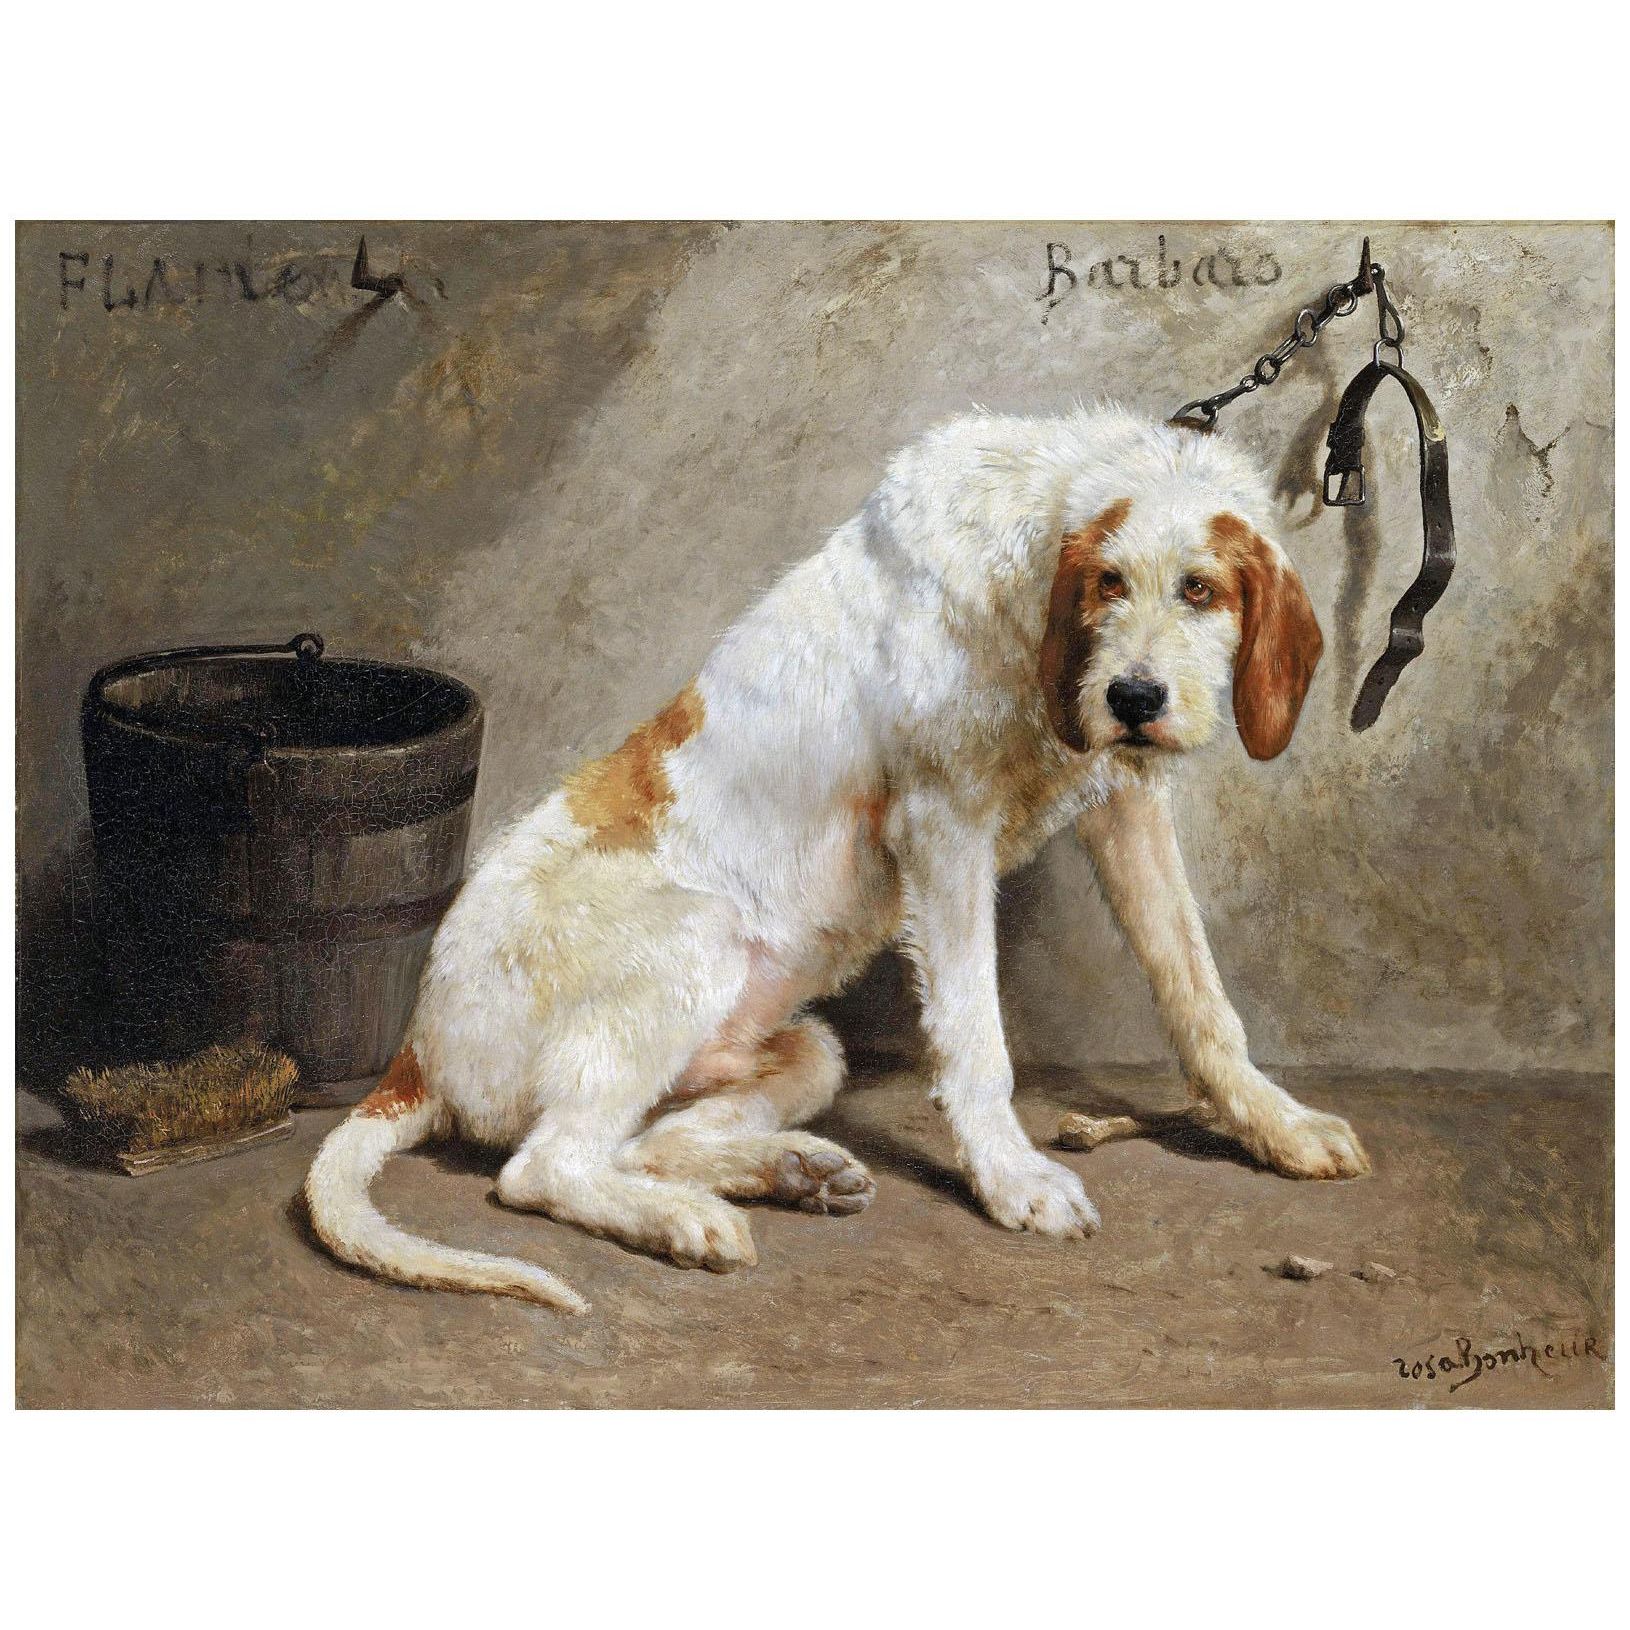 Rosa Bonheur. Barbaro après la chasse. 1858. Philadelphia Museum of Art